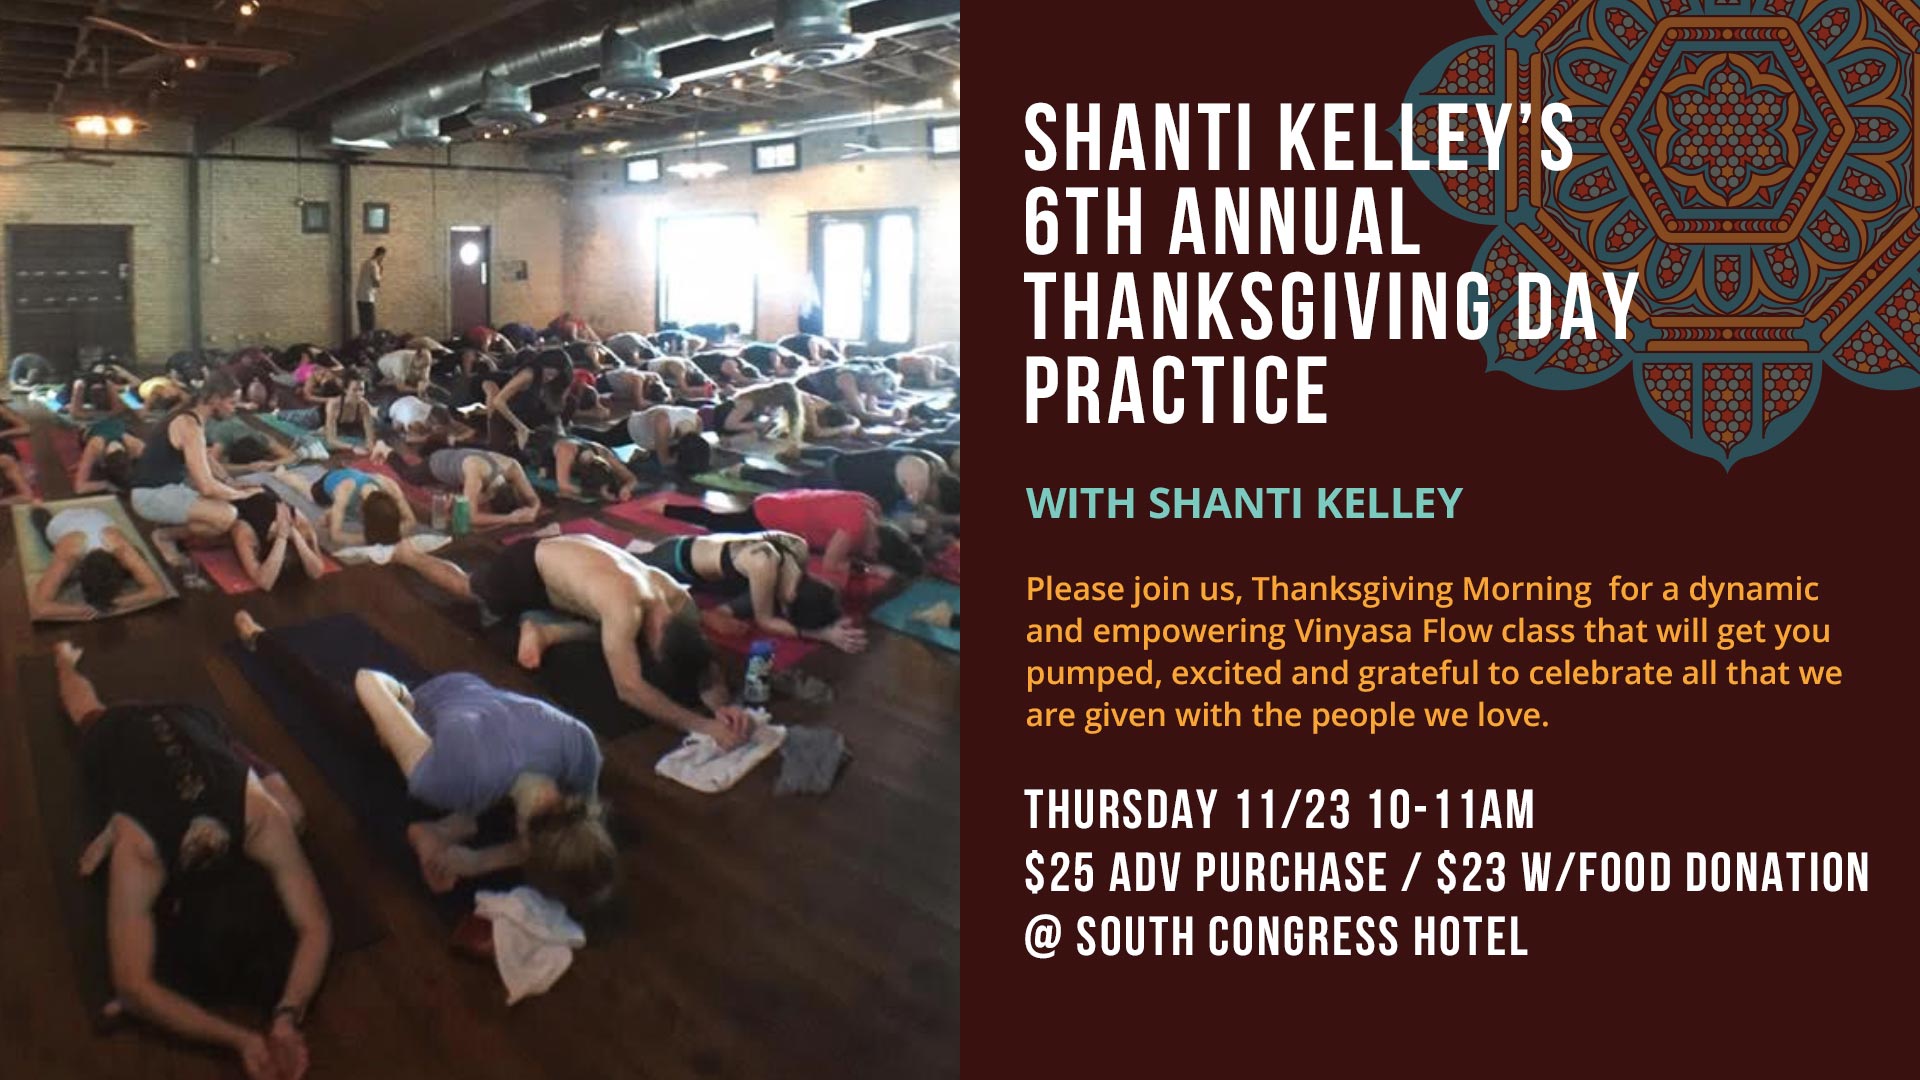 Shanti Kelley's 6th Annual Thanksgiving Practice